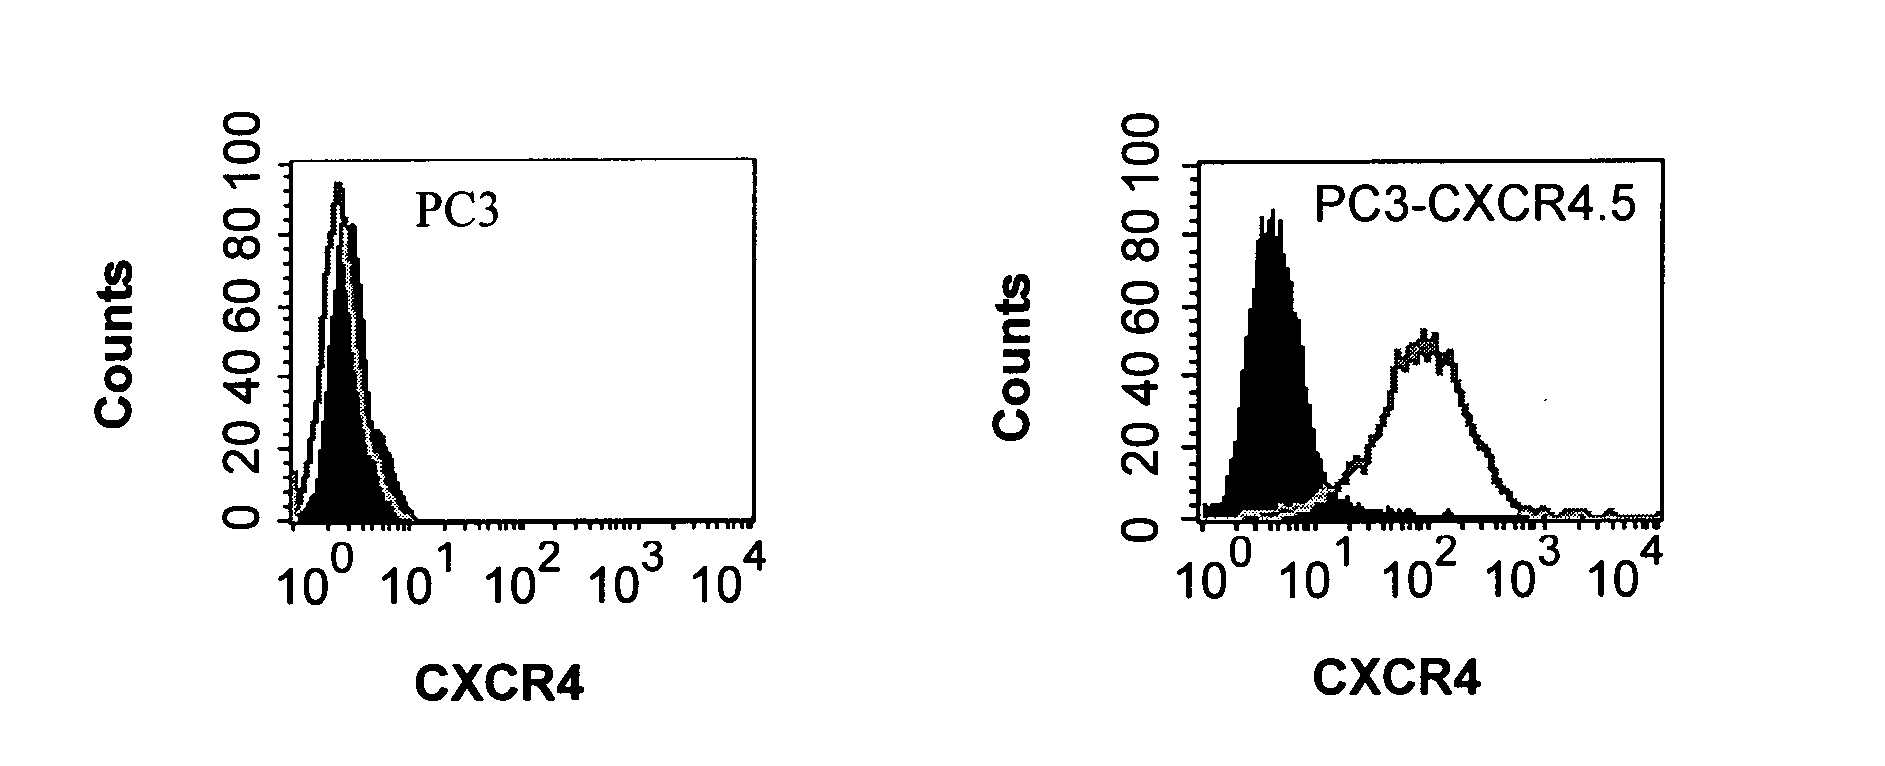 T-140 peptide analogs having cxcr4 super-agonist activity for immunomodulation